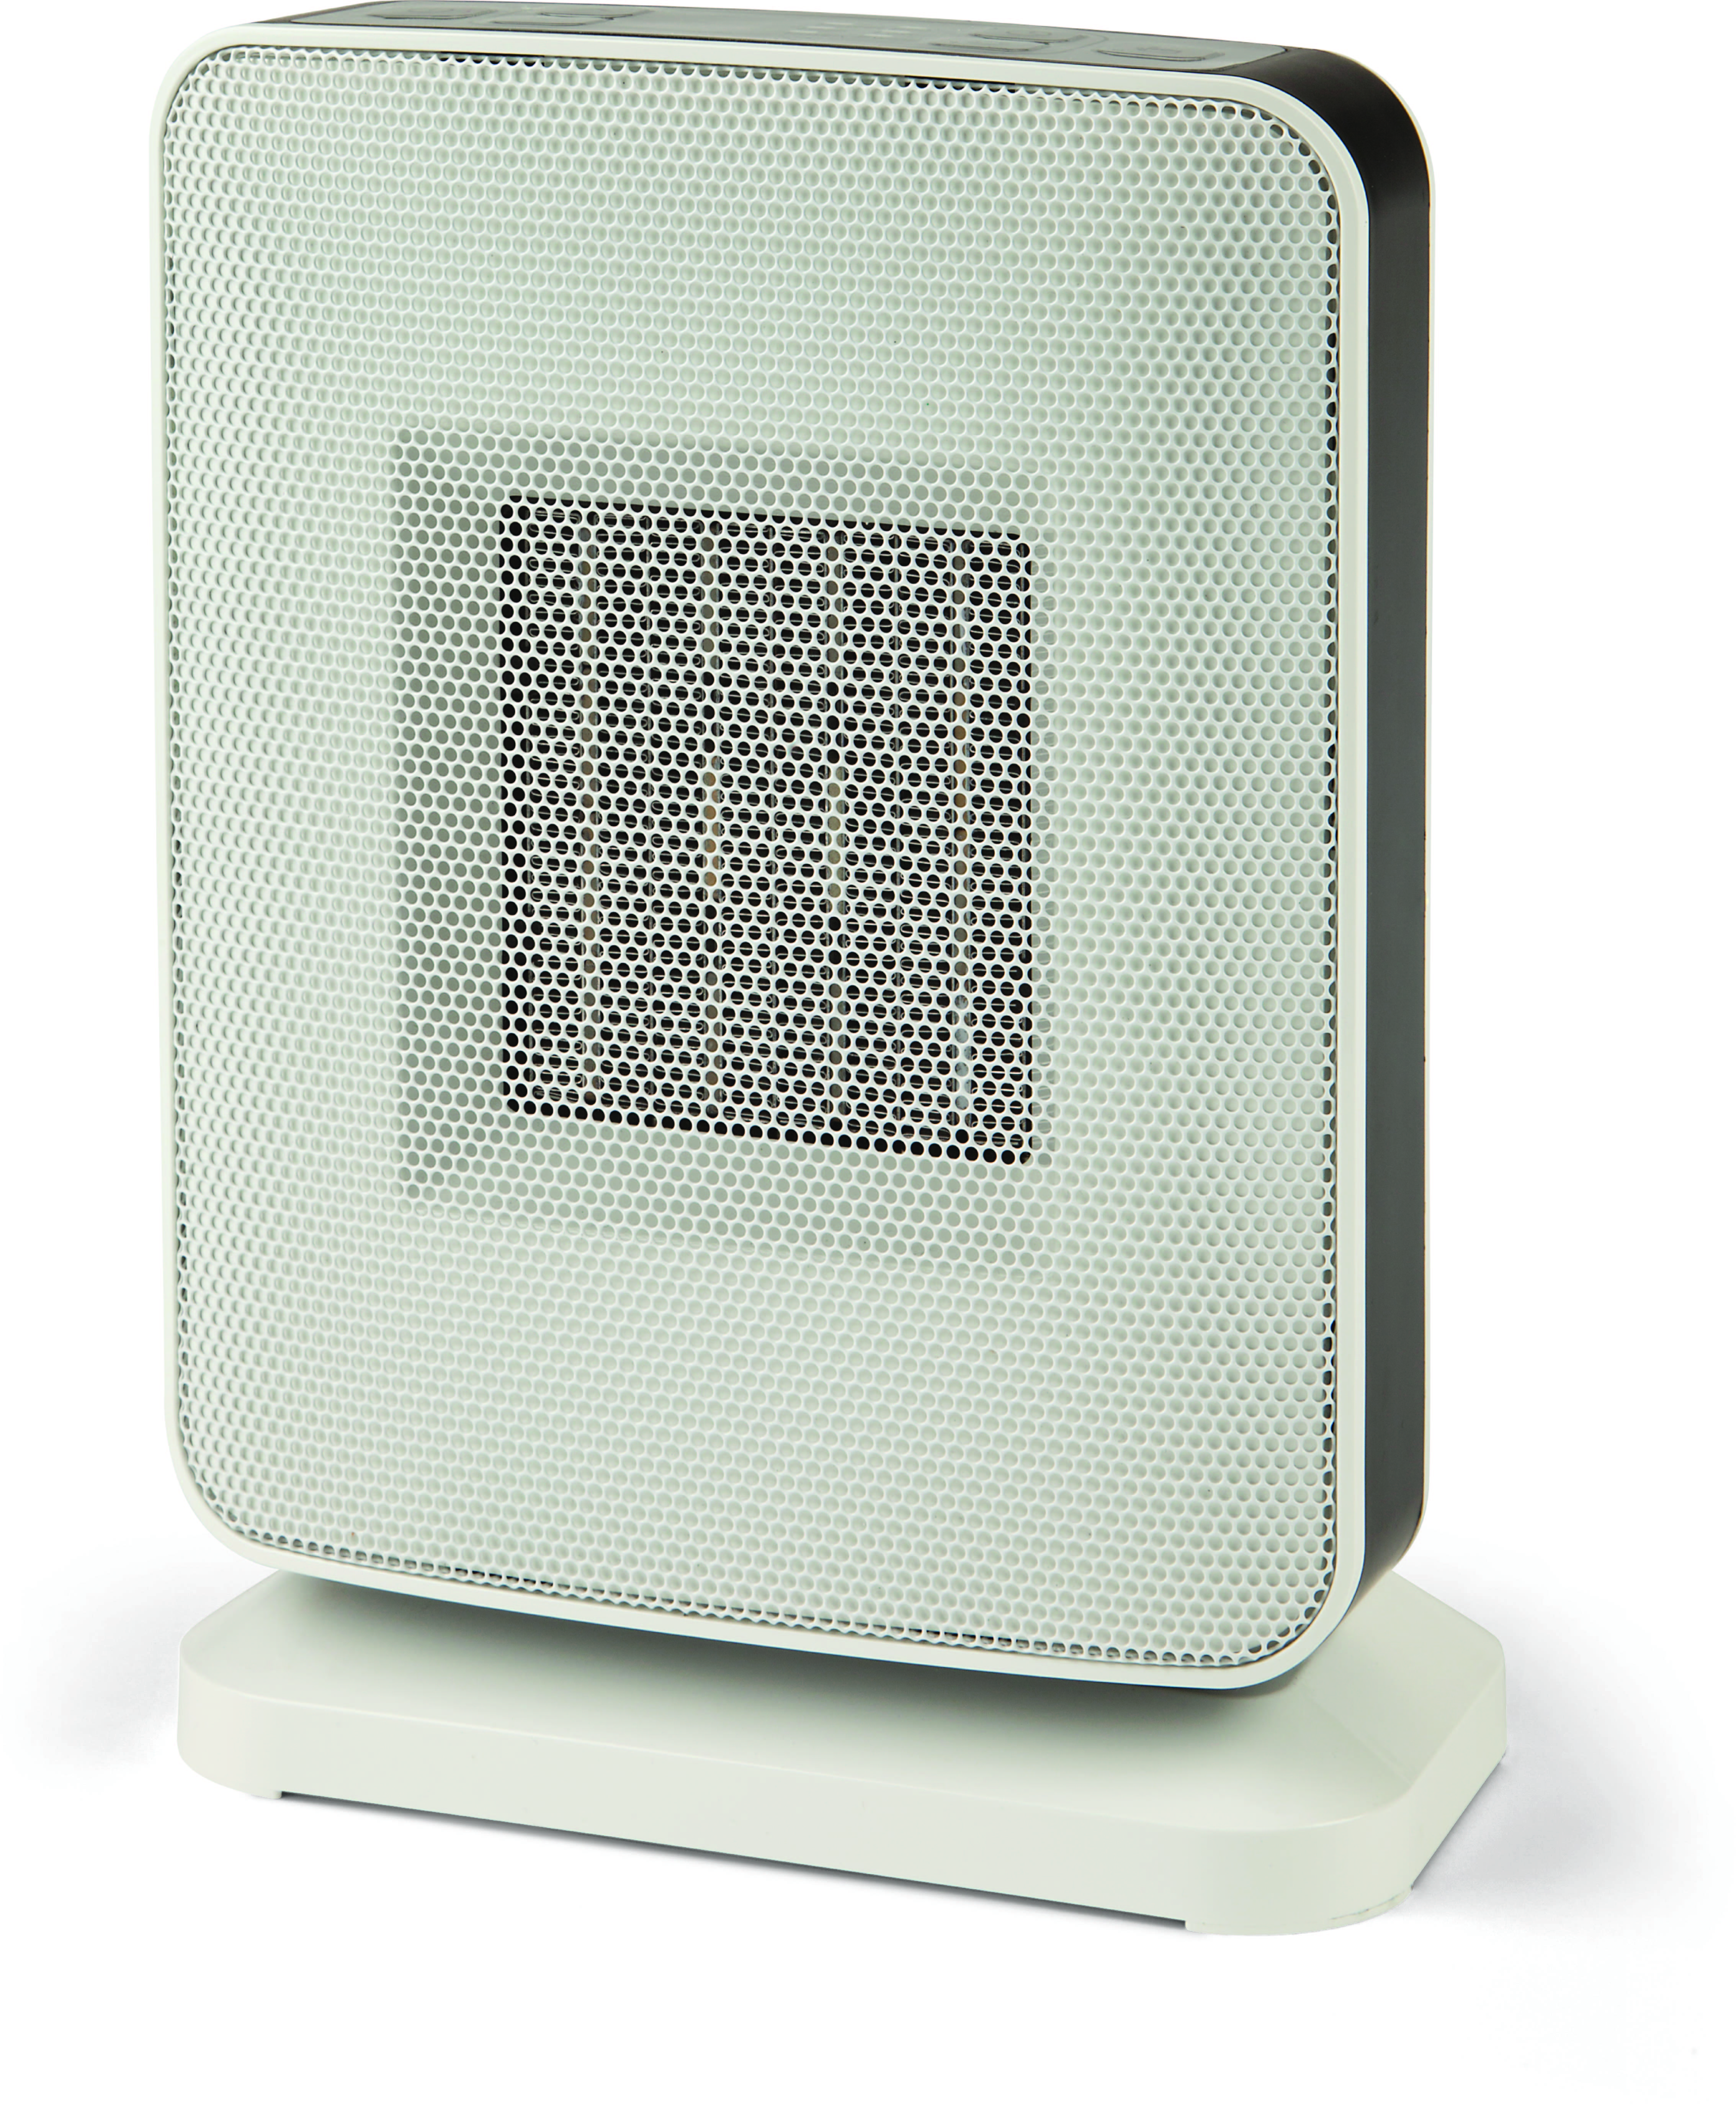 Soleil Digital Electric Portable Ceramic Space Heater, PTC-910B - image 1 of 5